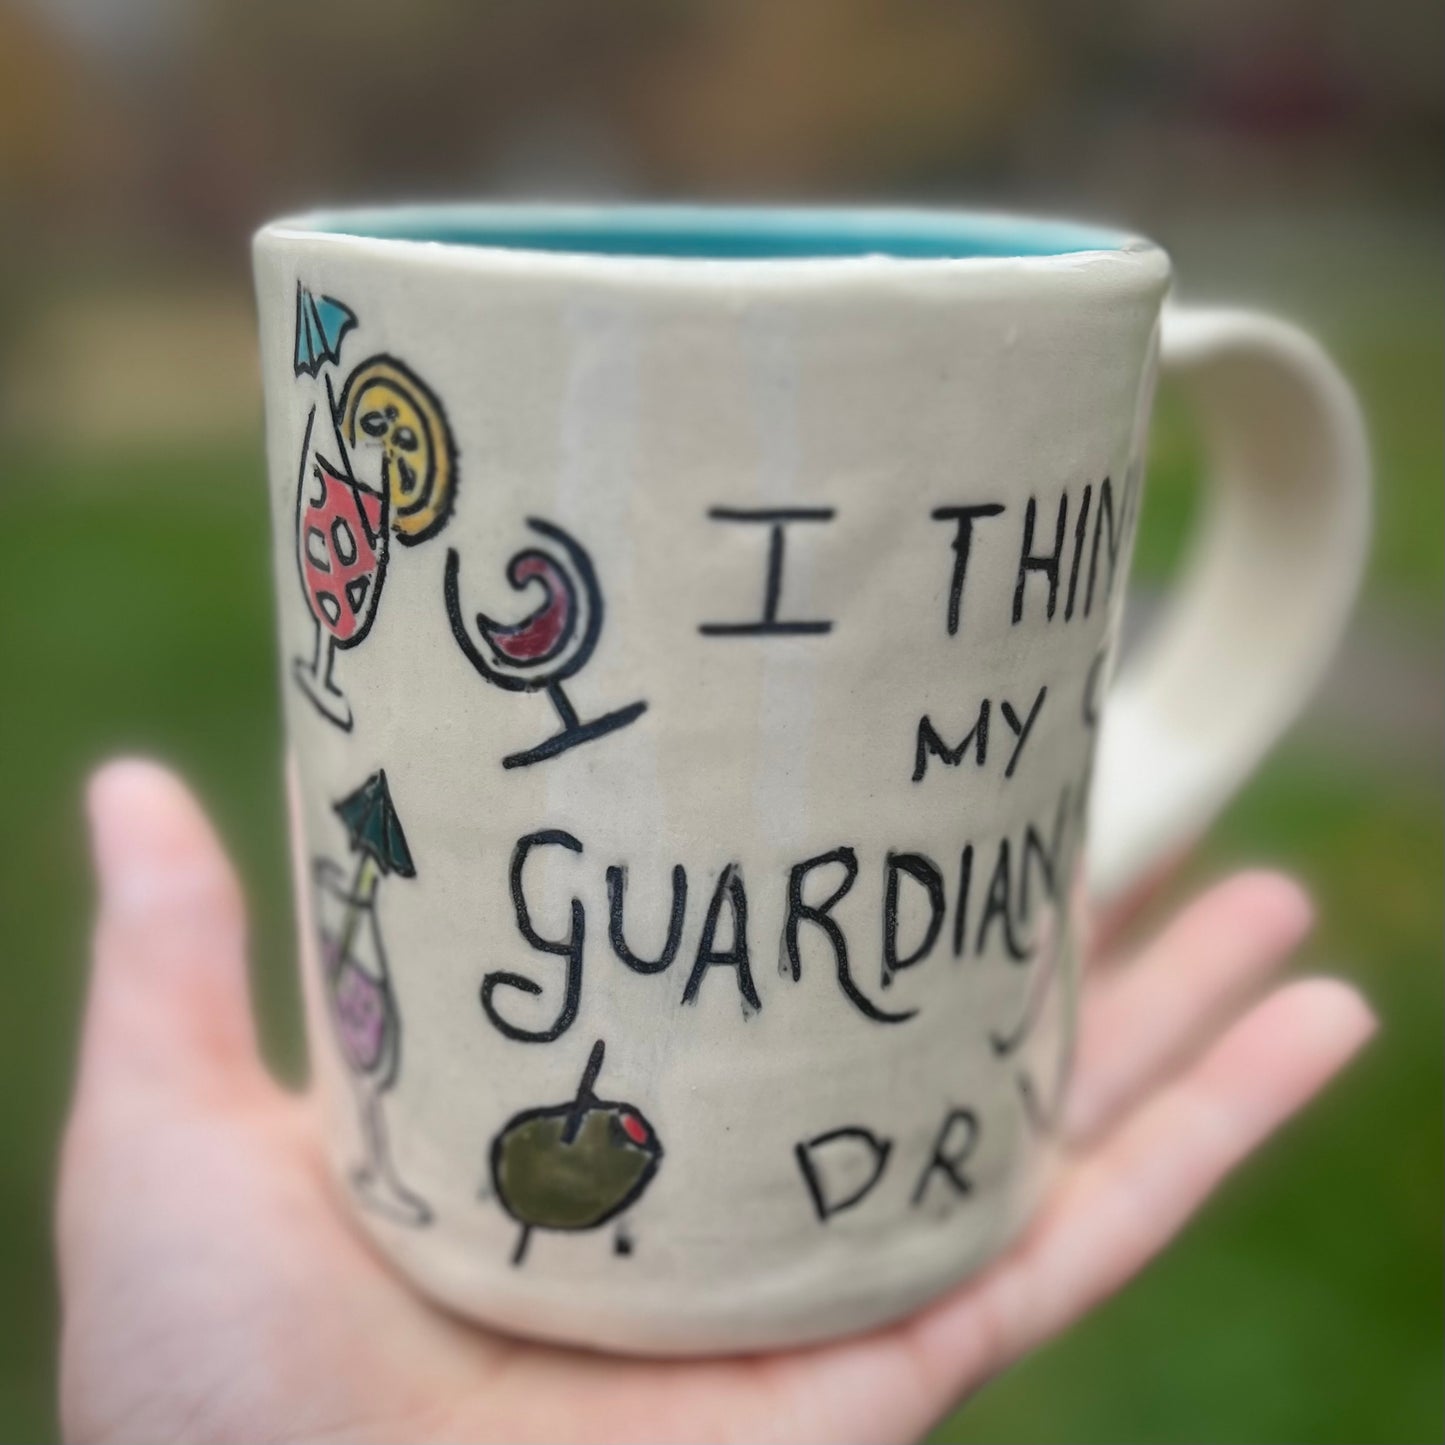 My Guardian Angels Drinks Ceramic Mug